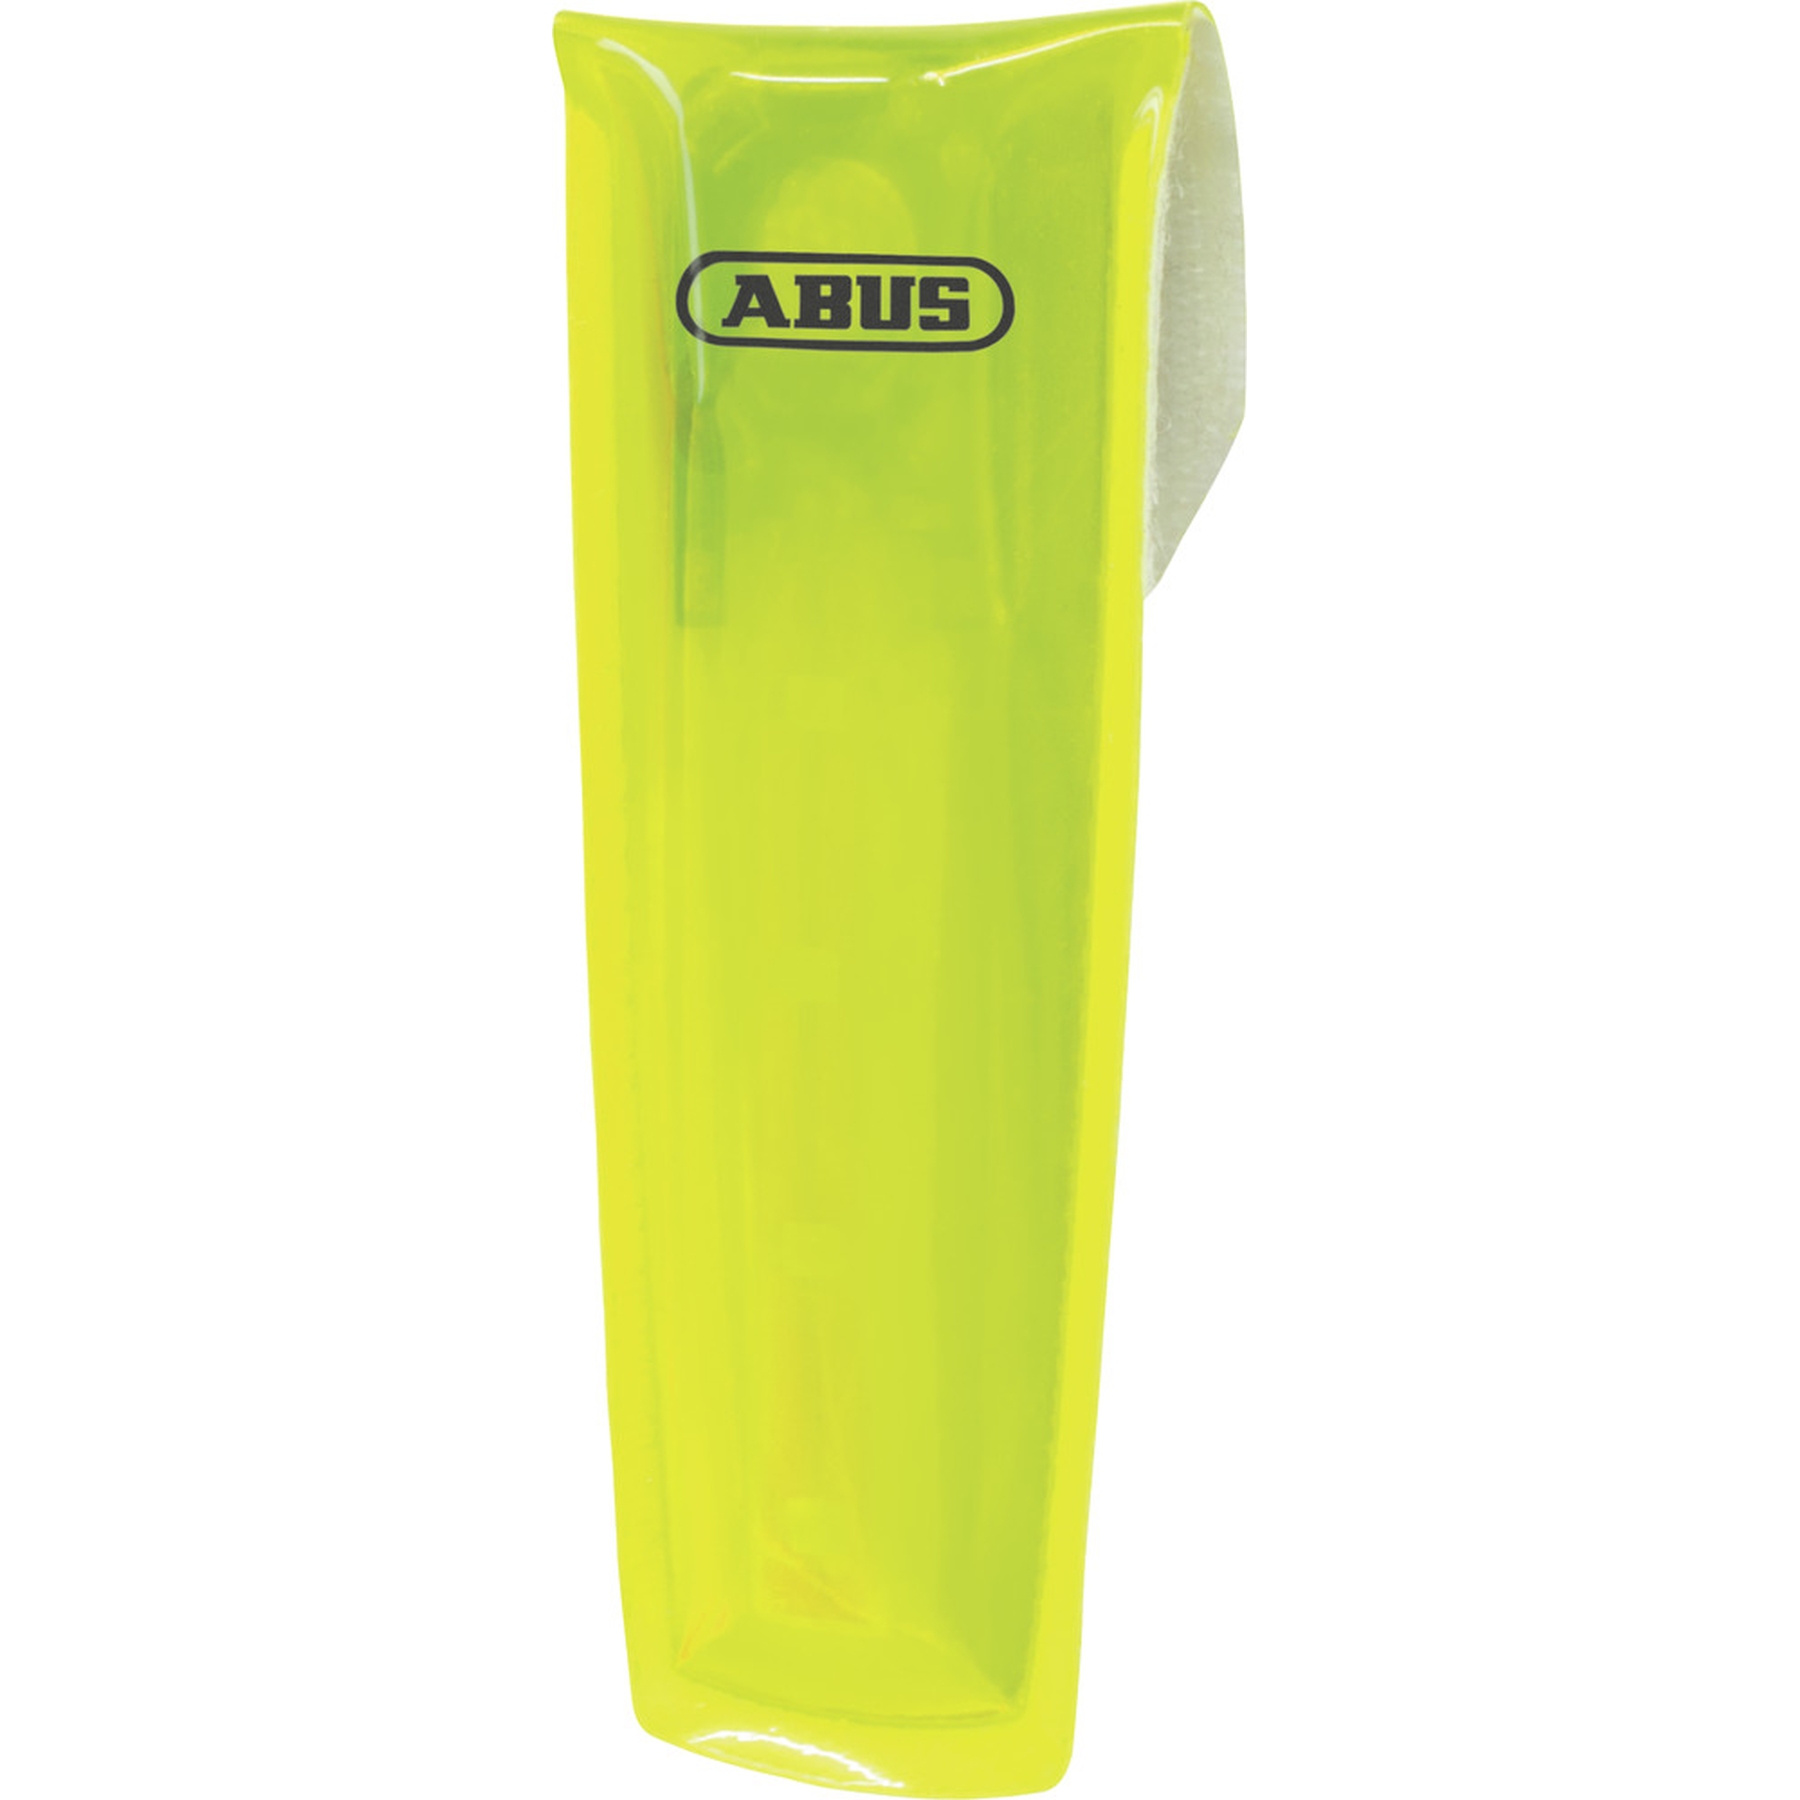 Productfoto van ABUS Lumino Indicator Light LED - yellow